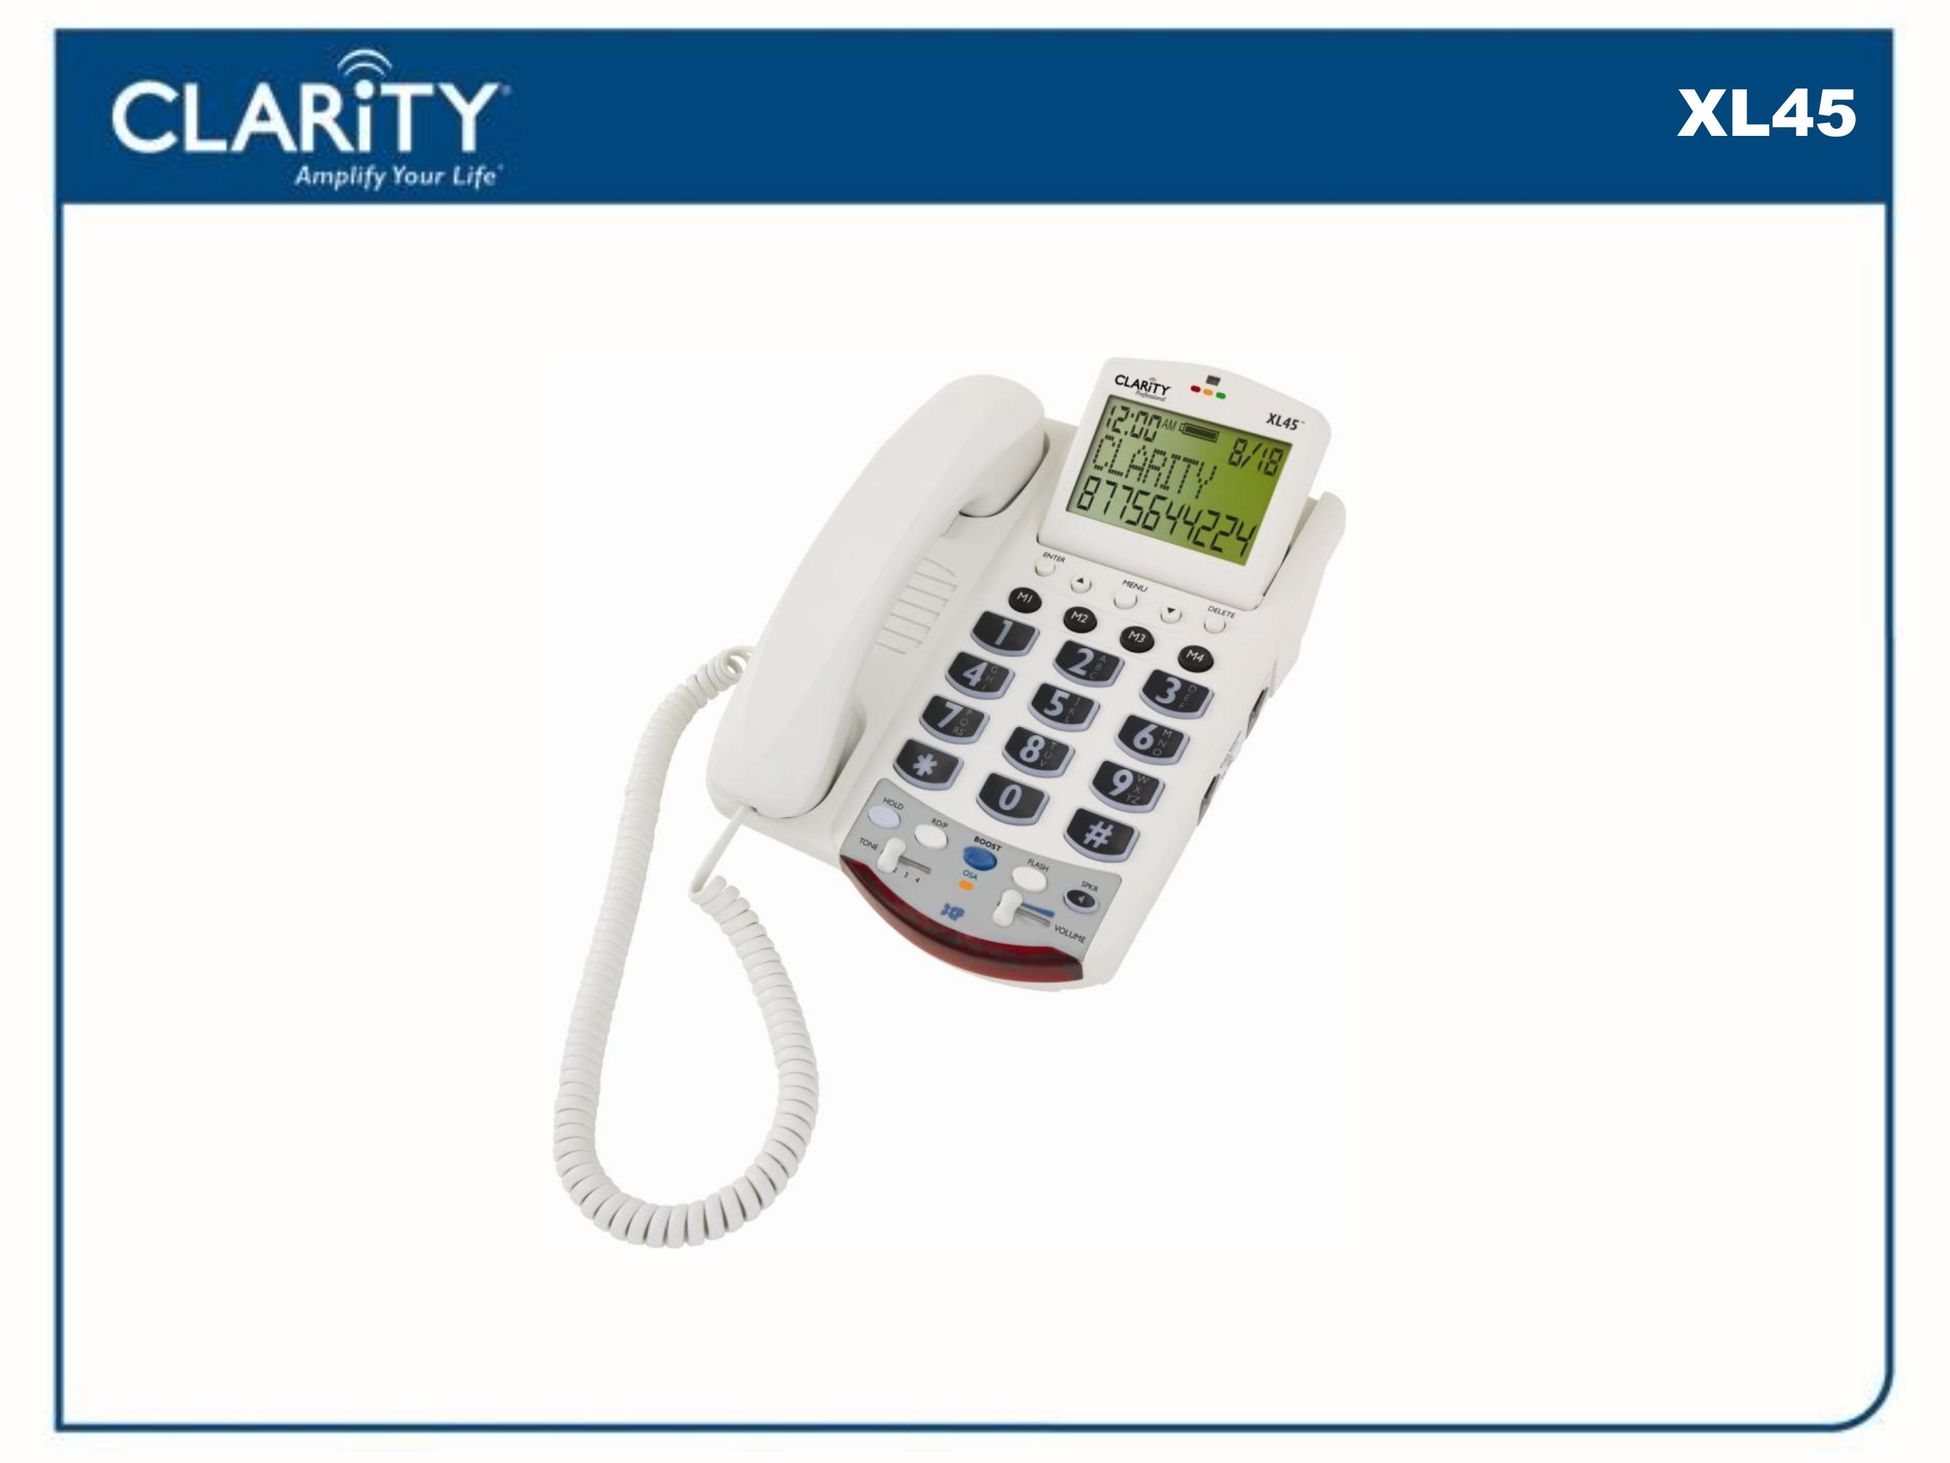 Clarity 54500001 Telephone User Manual